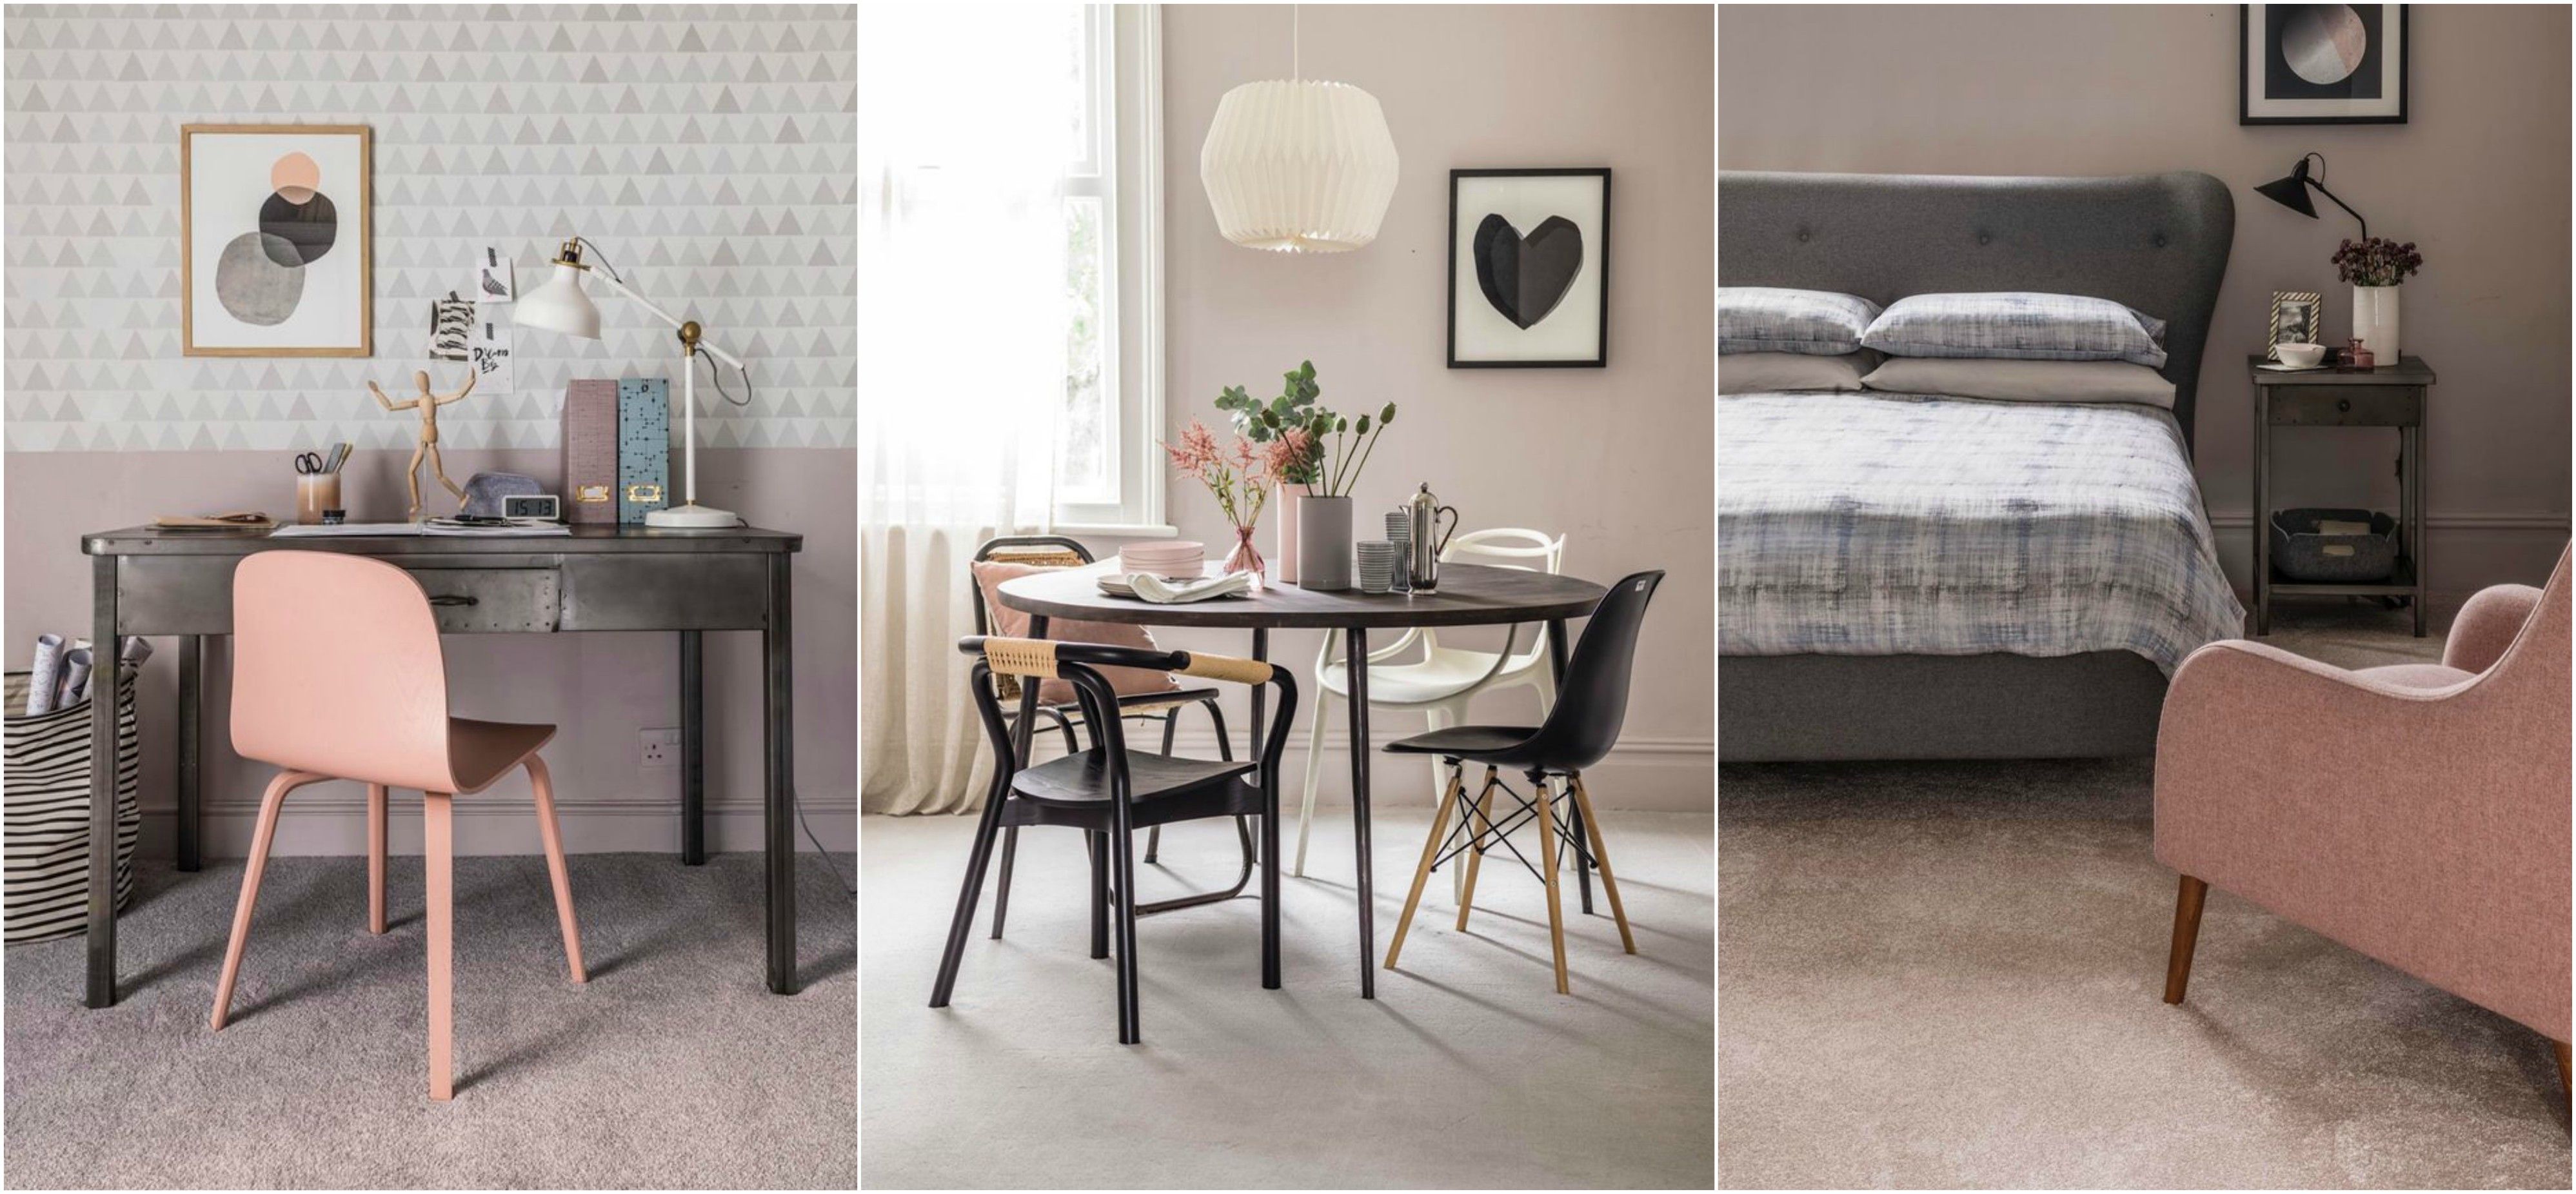 New! House Beautiful range at Carpetright: Carpets and Luxury Vinyl Tiles